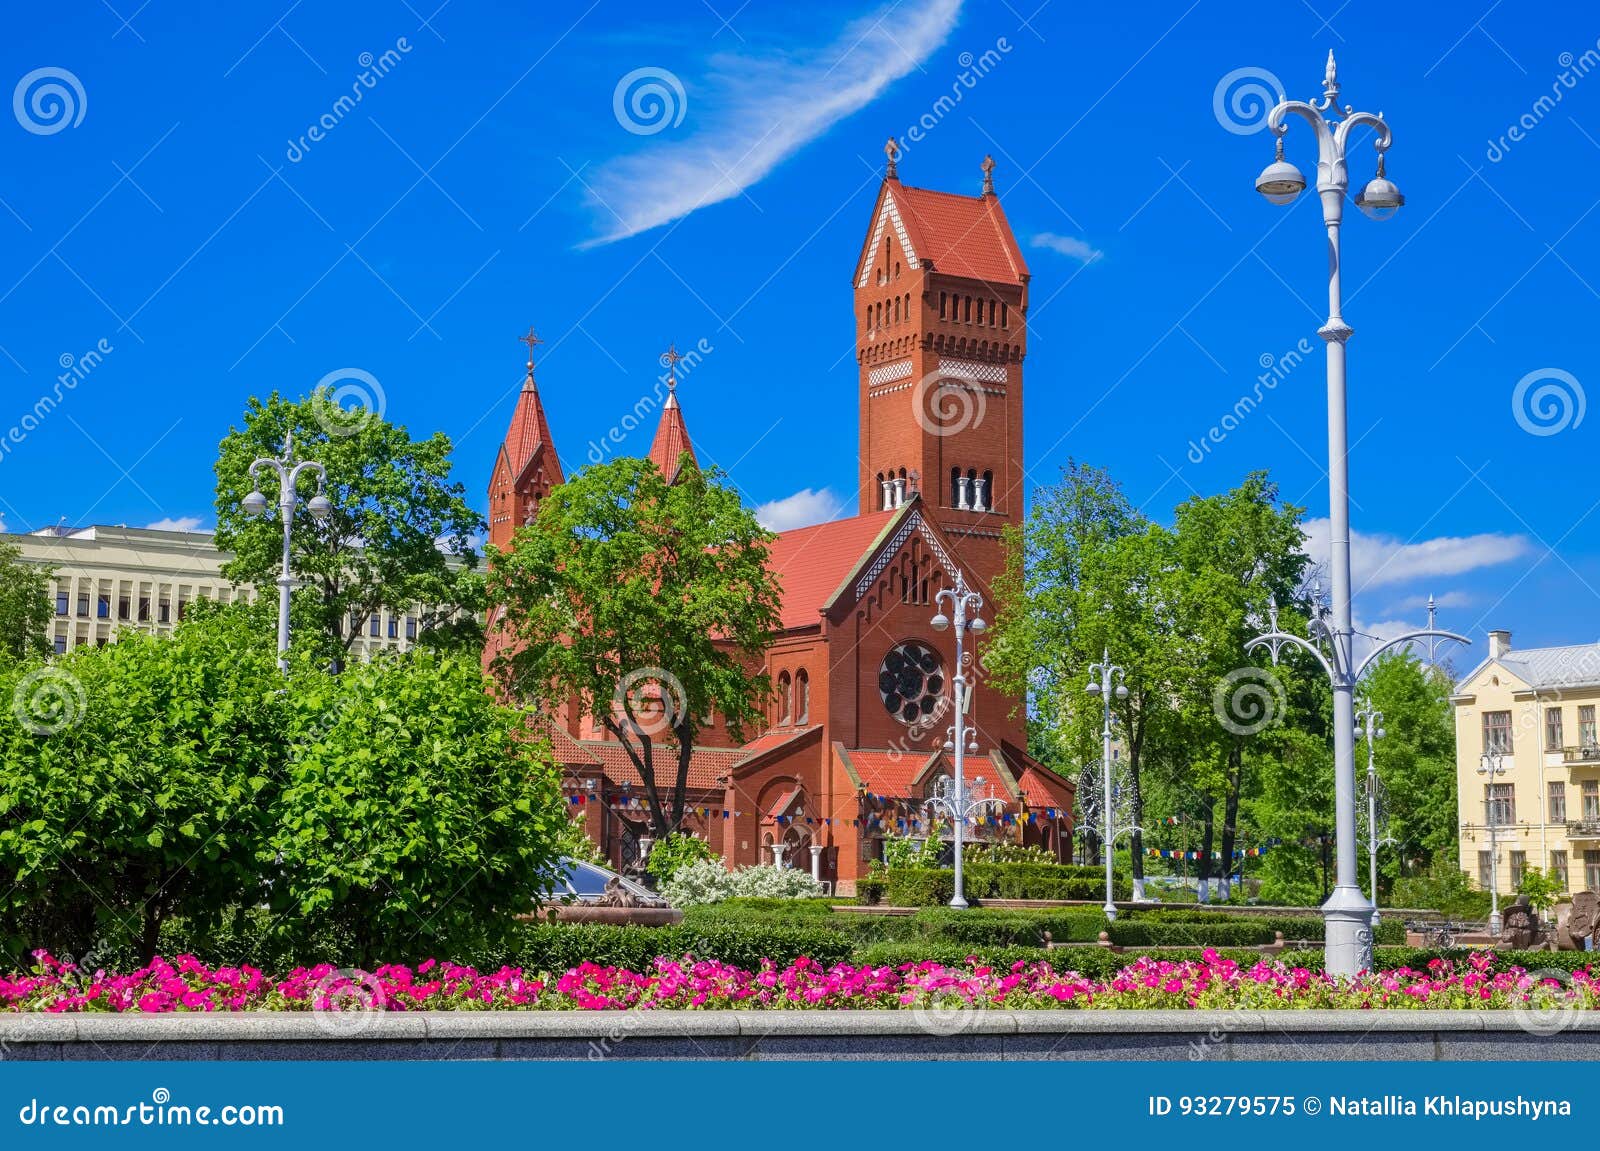 church of saints simon and helena in minsk, belarus.